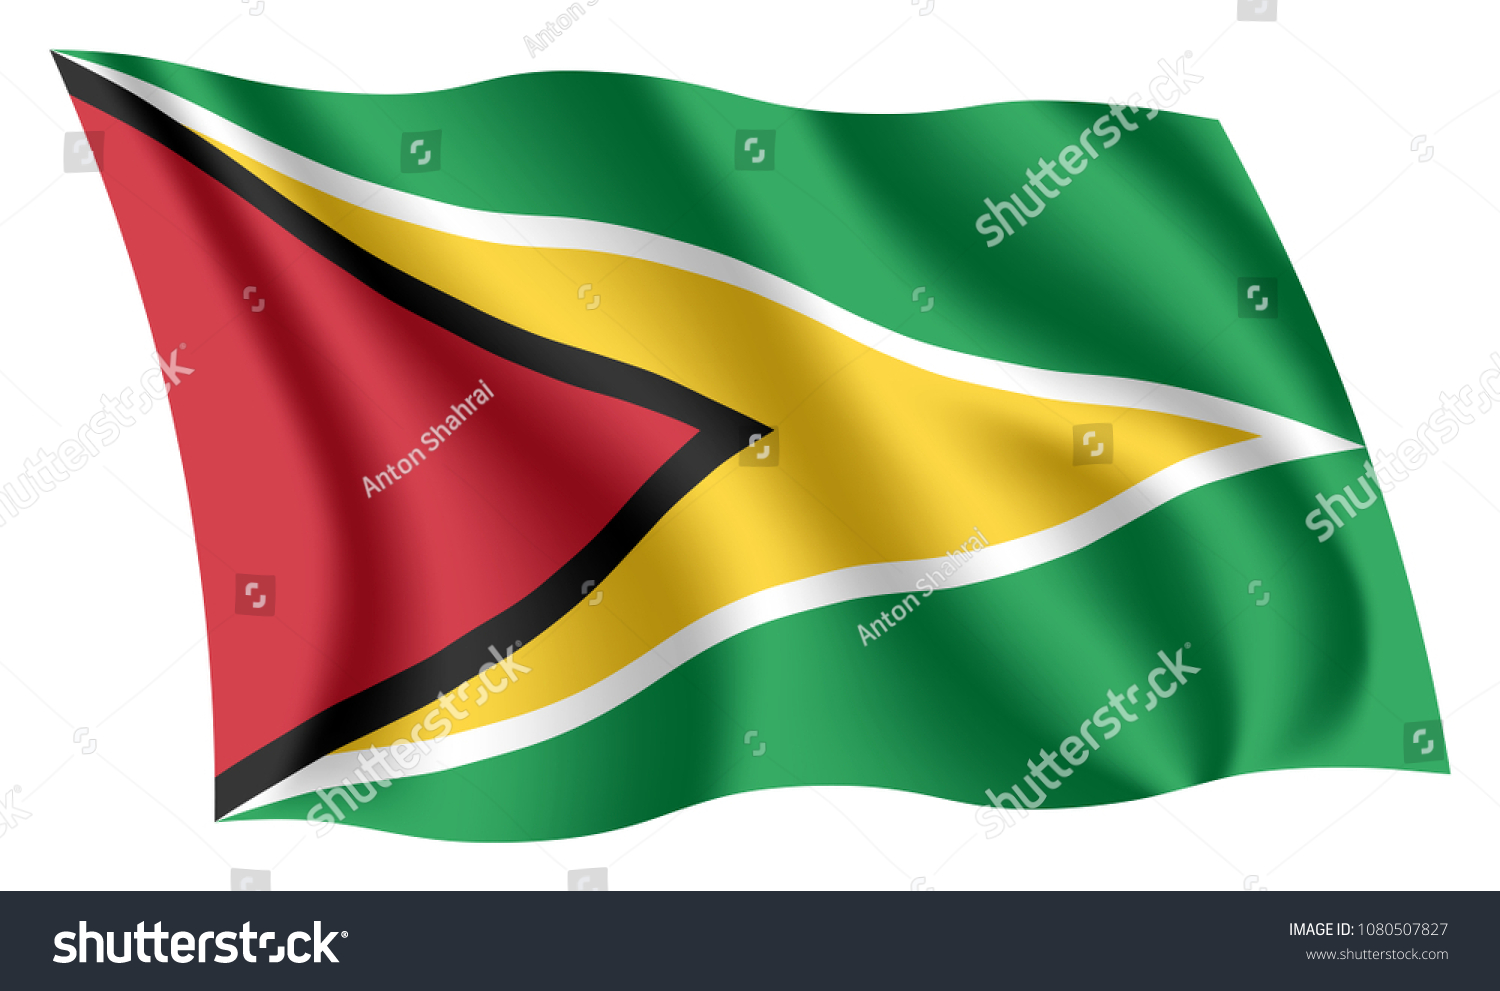 SVG of Guyana flag. Isolated national flag of Guyana. Waving flag of the Co-operative Republic of Guyana. Fluttering textile guyanese flag. The Golden Arrowhead. svg